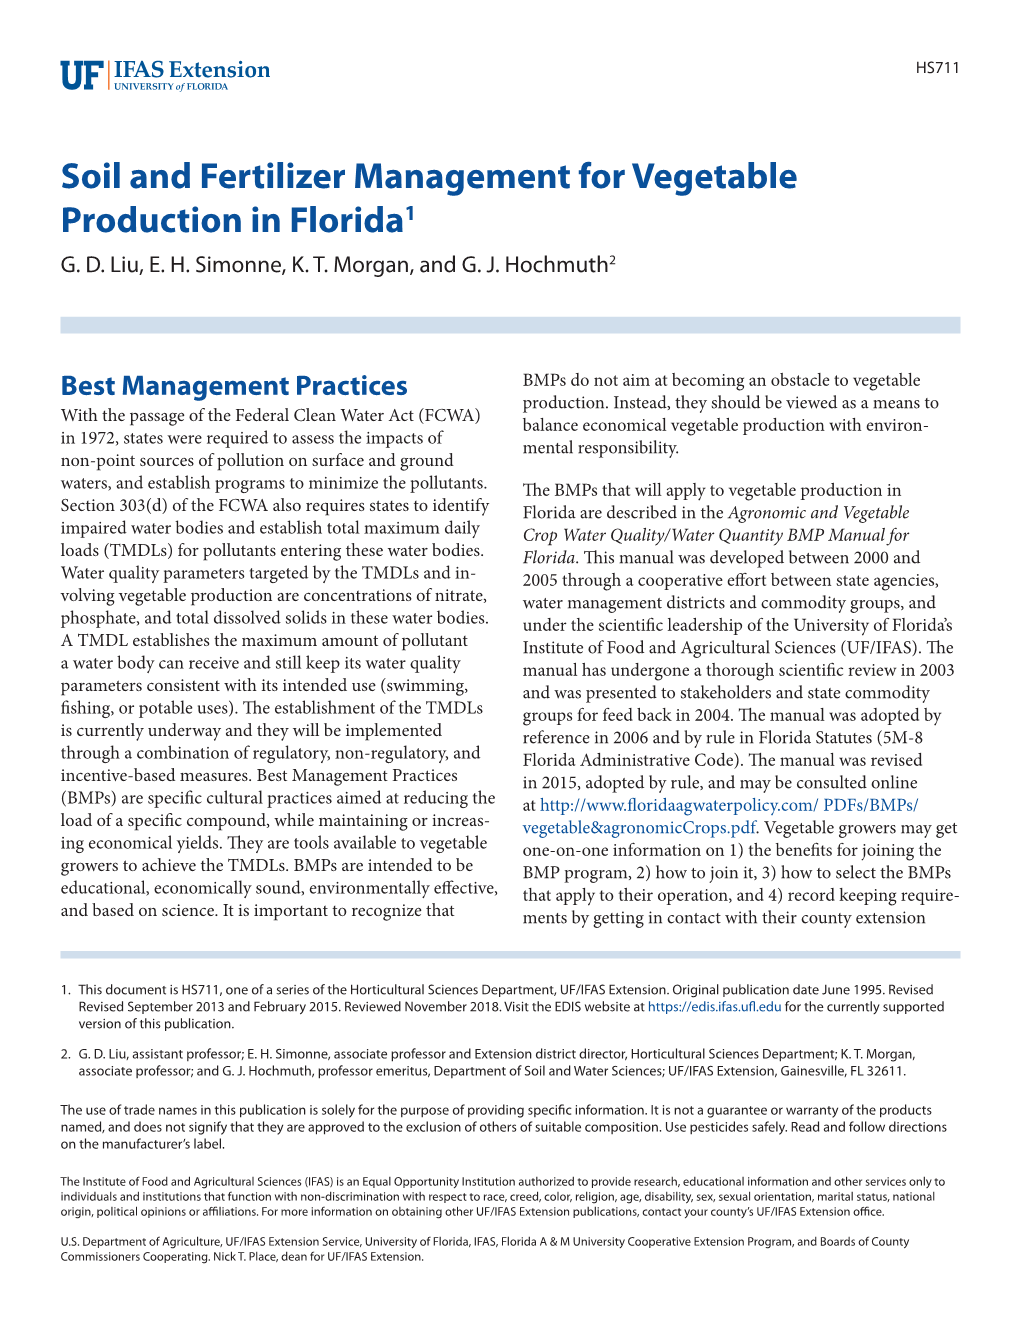 Soil and Fertilizer Management for Vegetable Production in Florida1 G